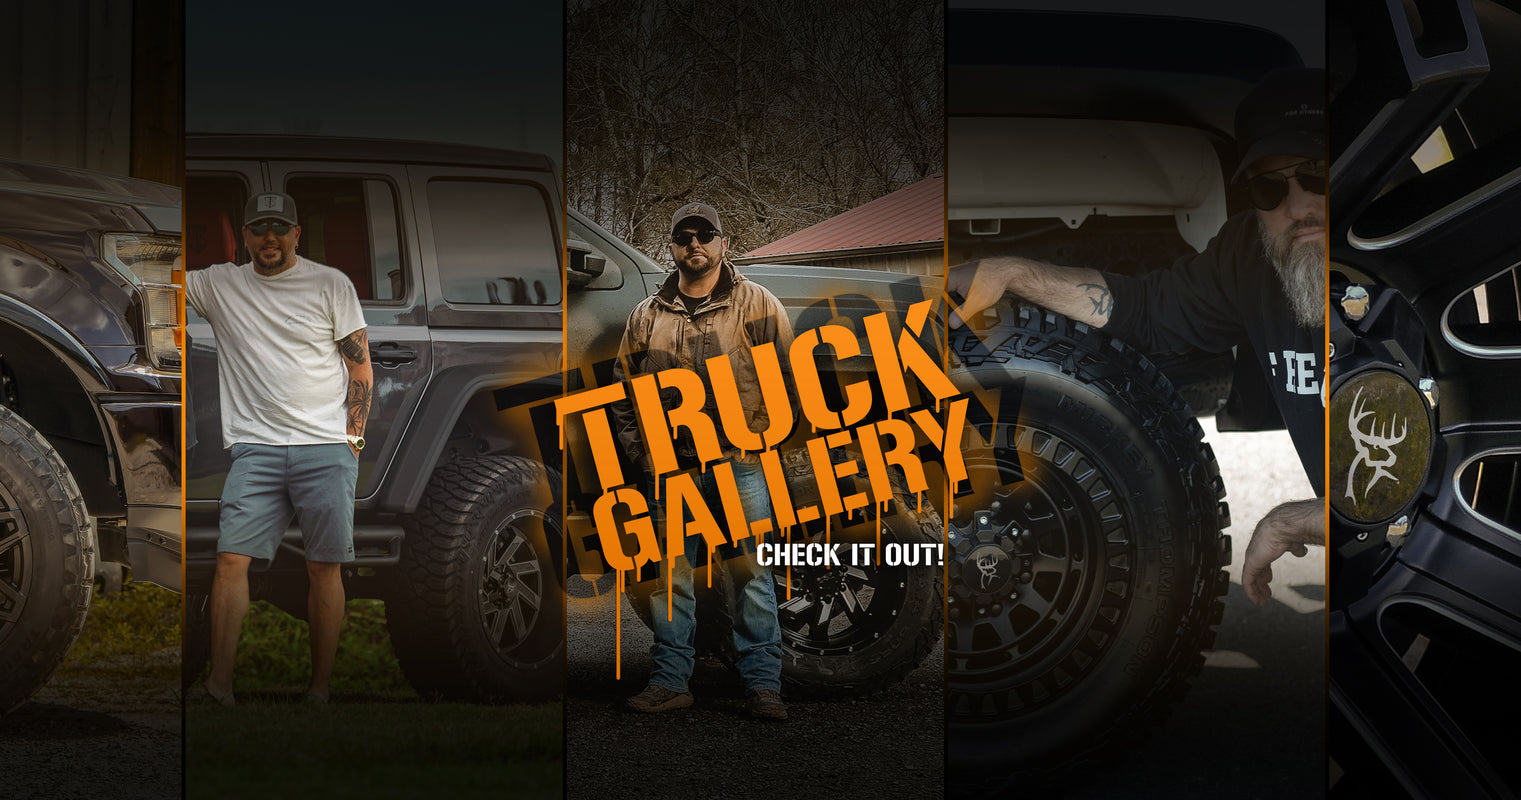 Buck Commander Wheels Truck Gallery picture showing trucks Jason Aldean Tyler Farr, & Willie Robertson